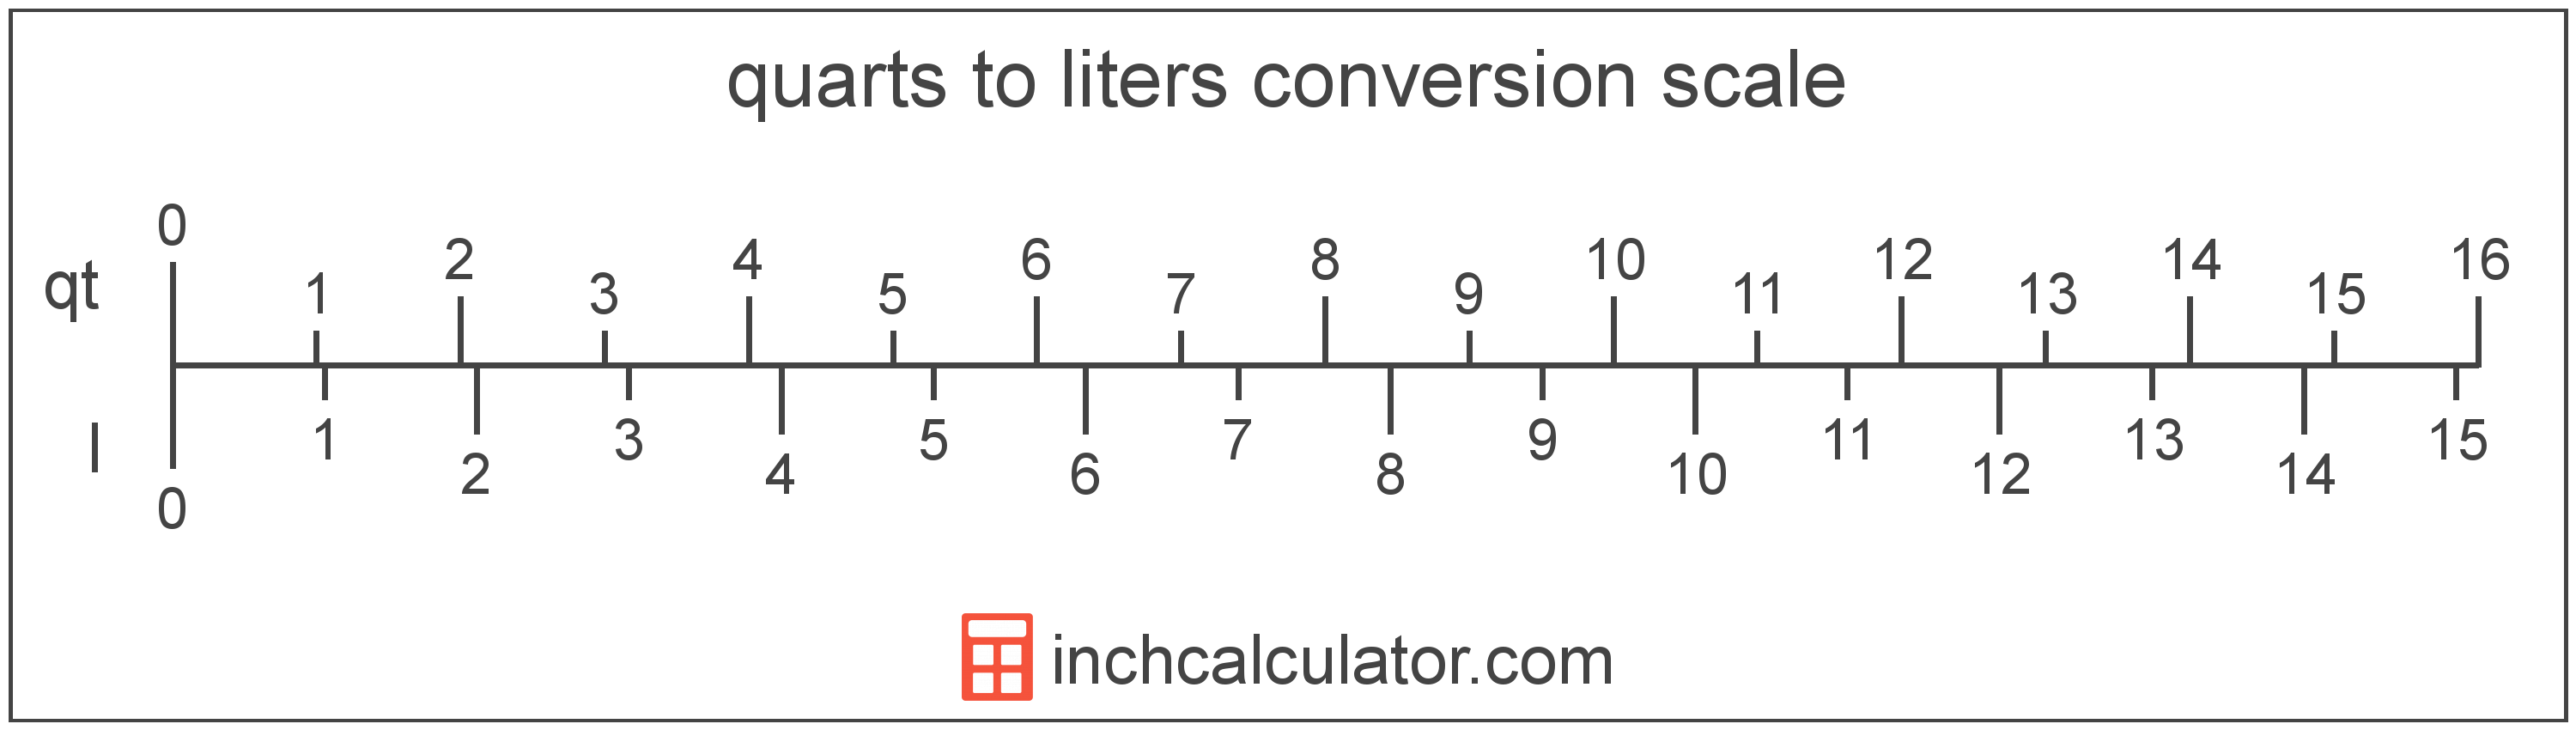 Quarts to Liters Conversion (qt to l) - Inch Calculator